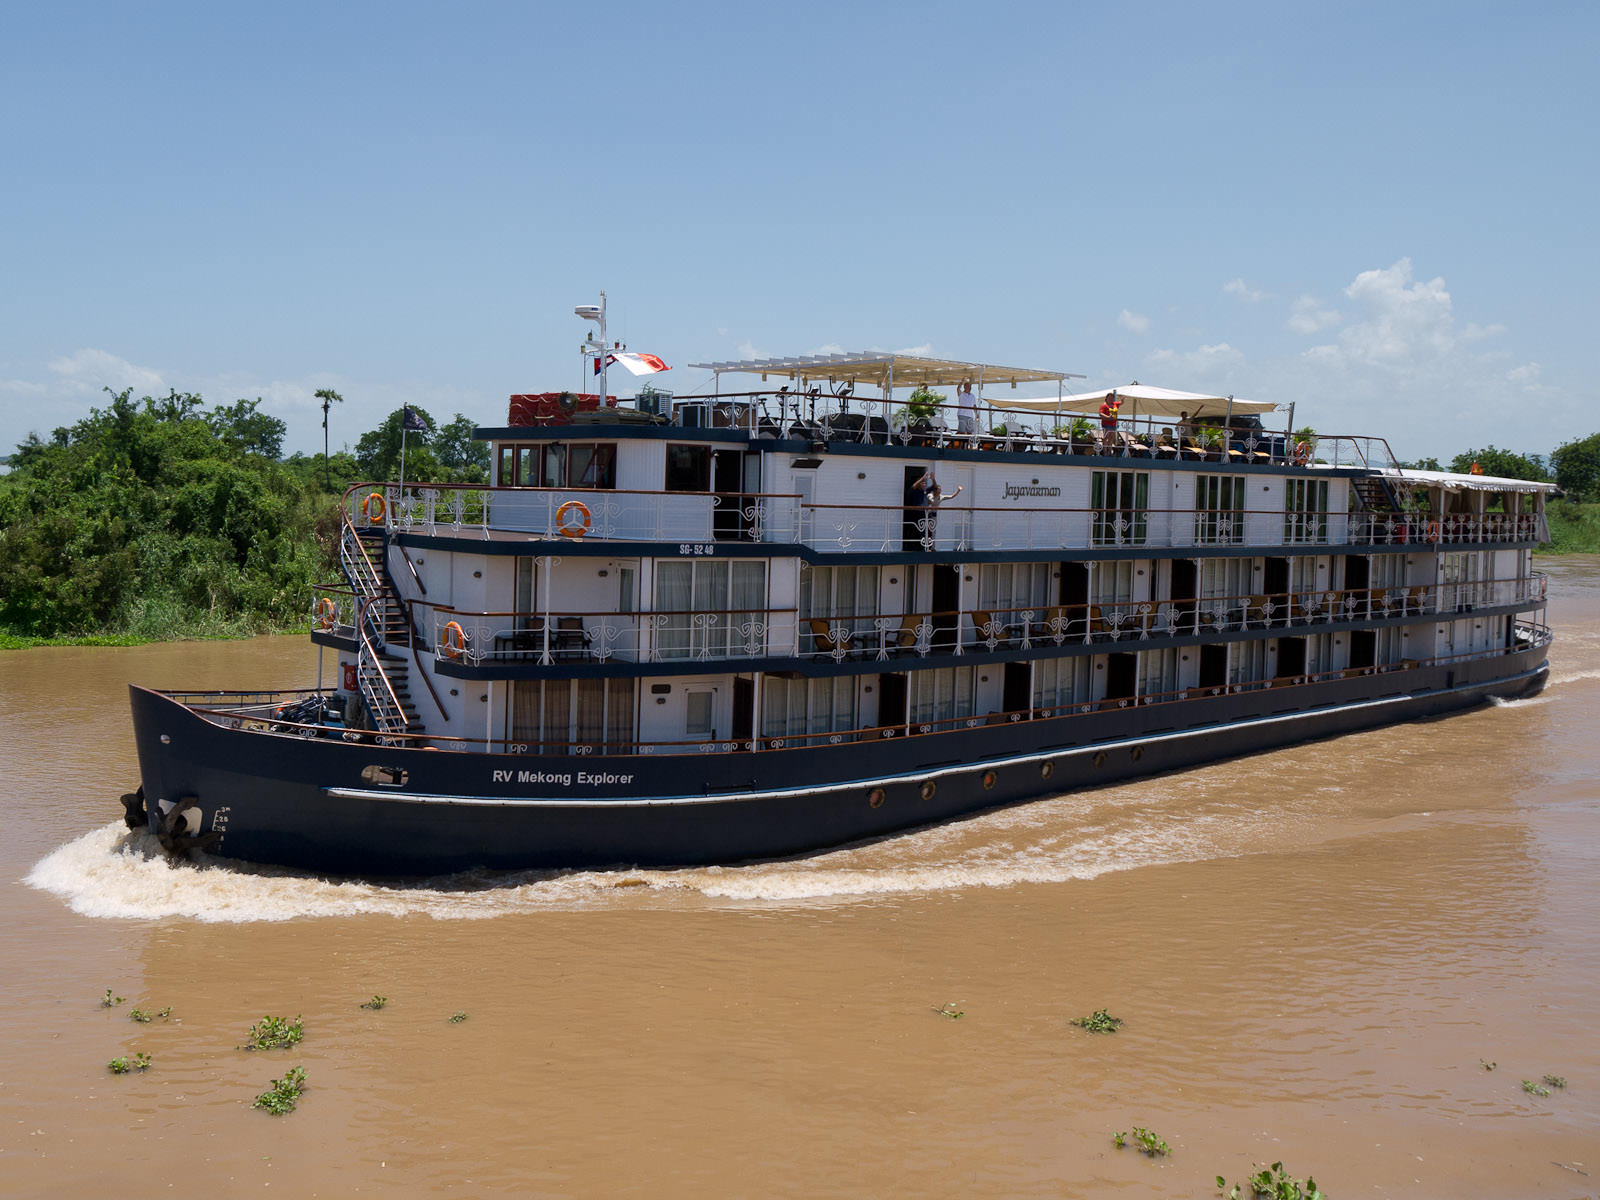 Our sister ship, the RV Mekong Explorer